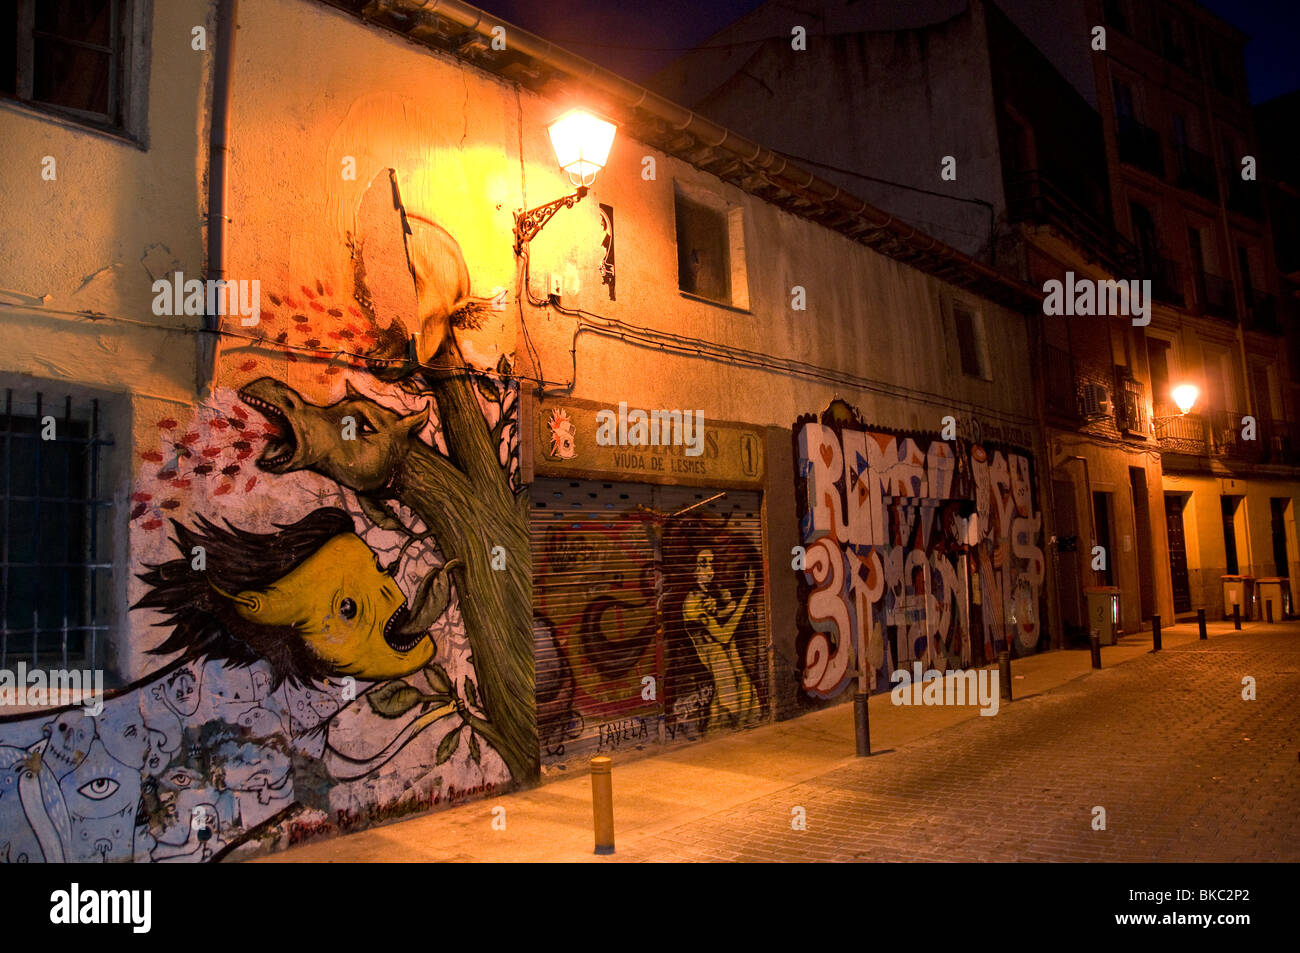 Madrid España graffiti calle luz nocturna Fotografía de stock - Alamy